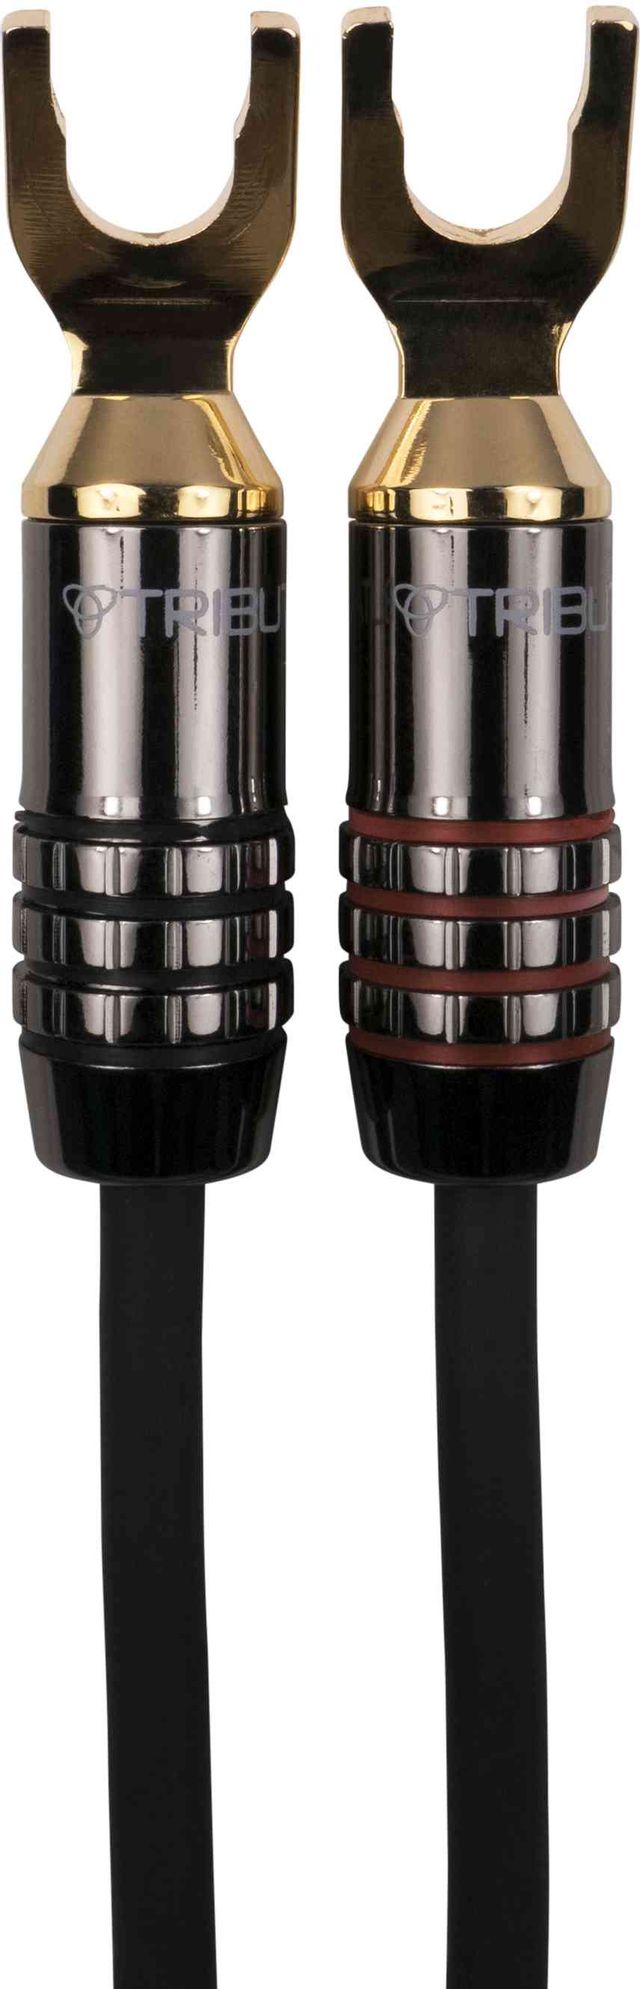 Tributaries® Series 8 6 Ft. Spade Lugs Speaker Cable